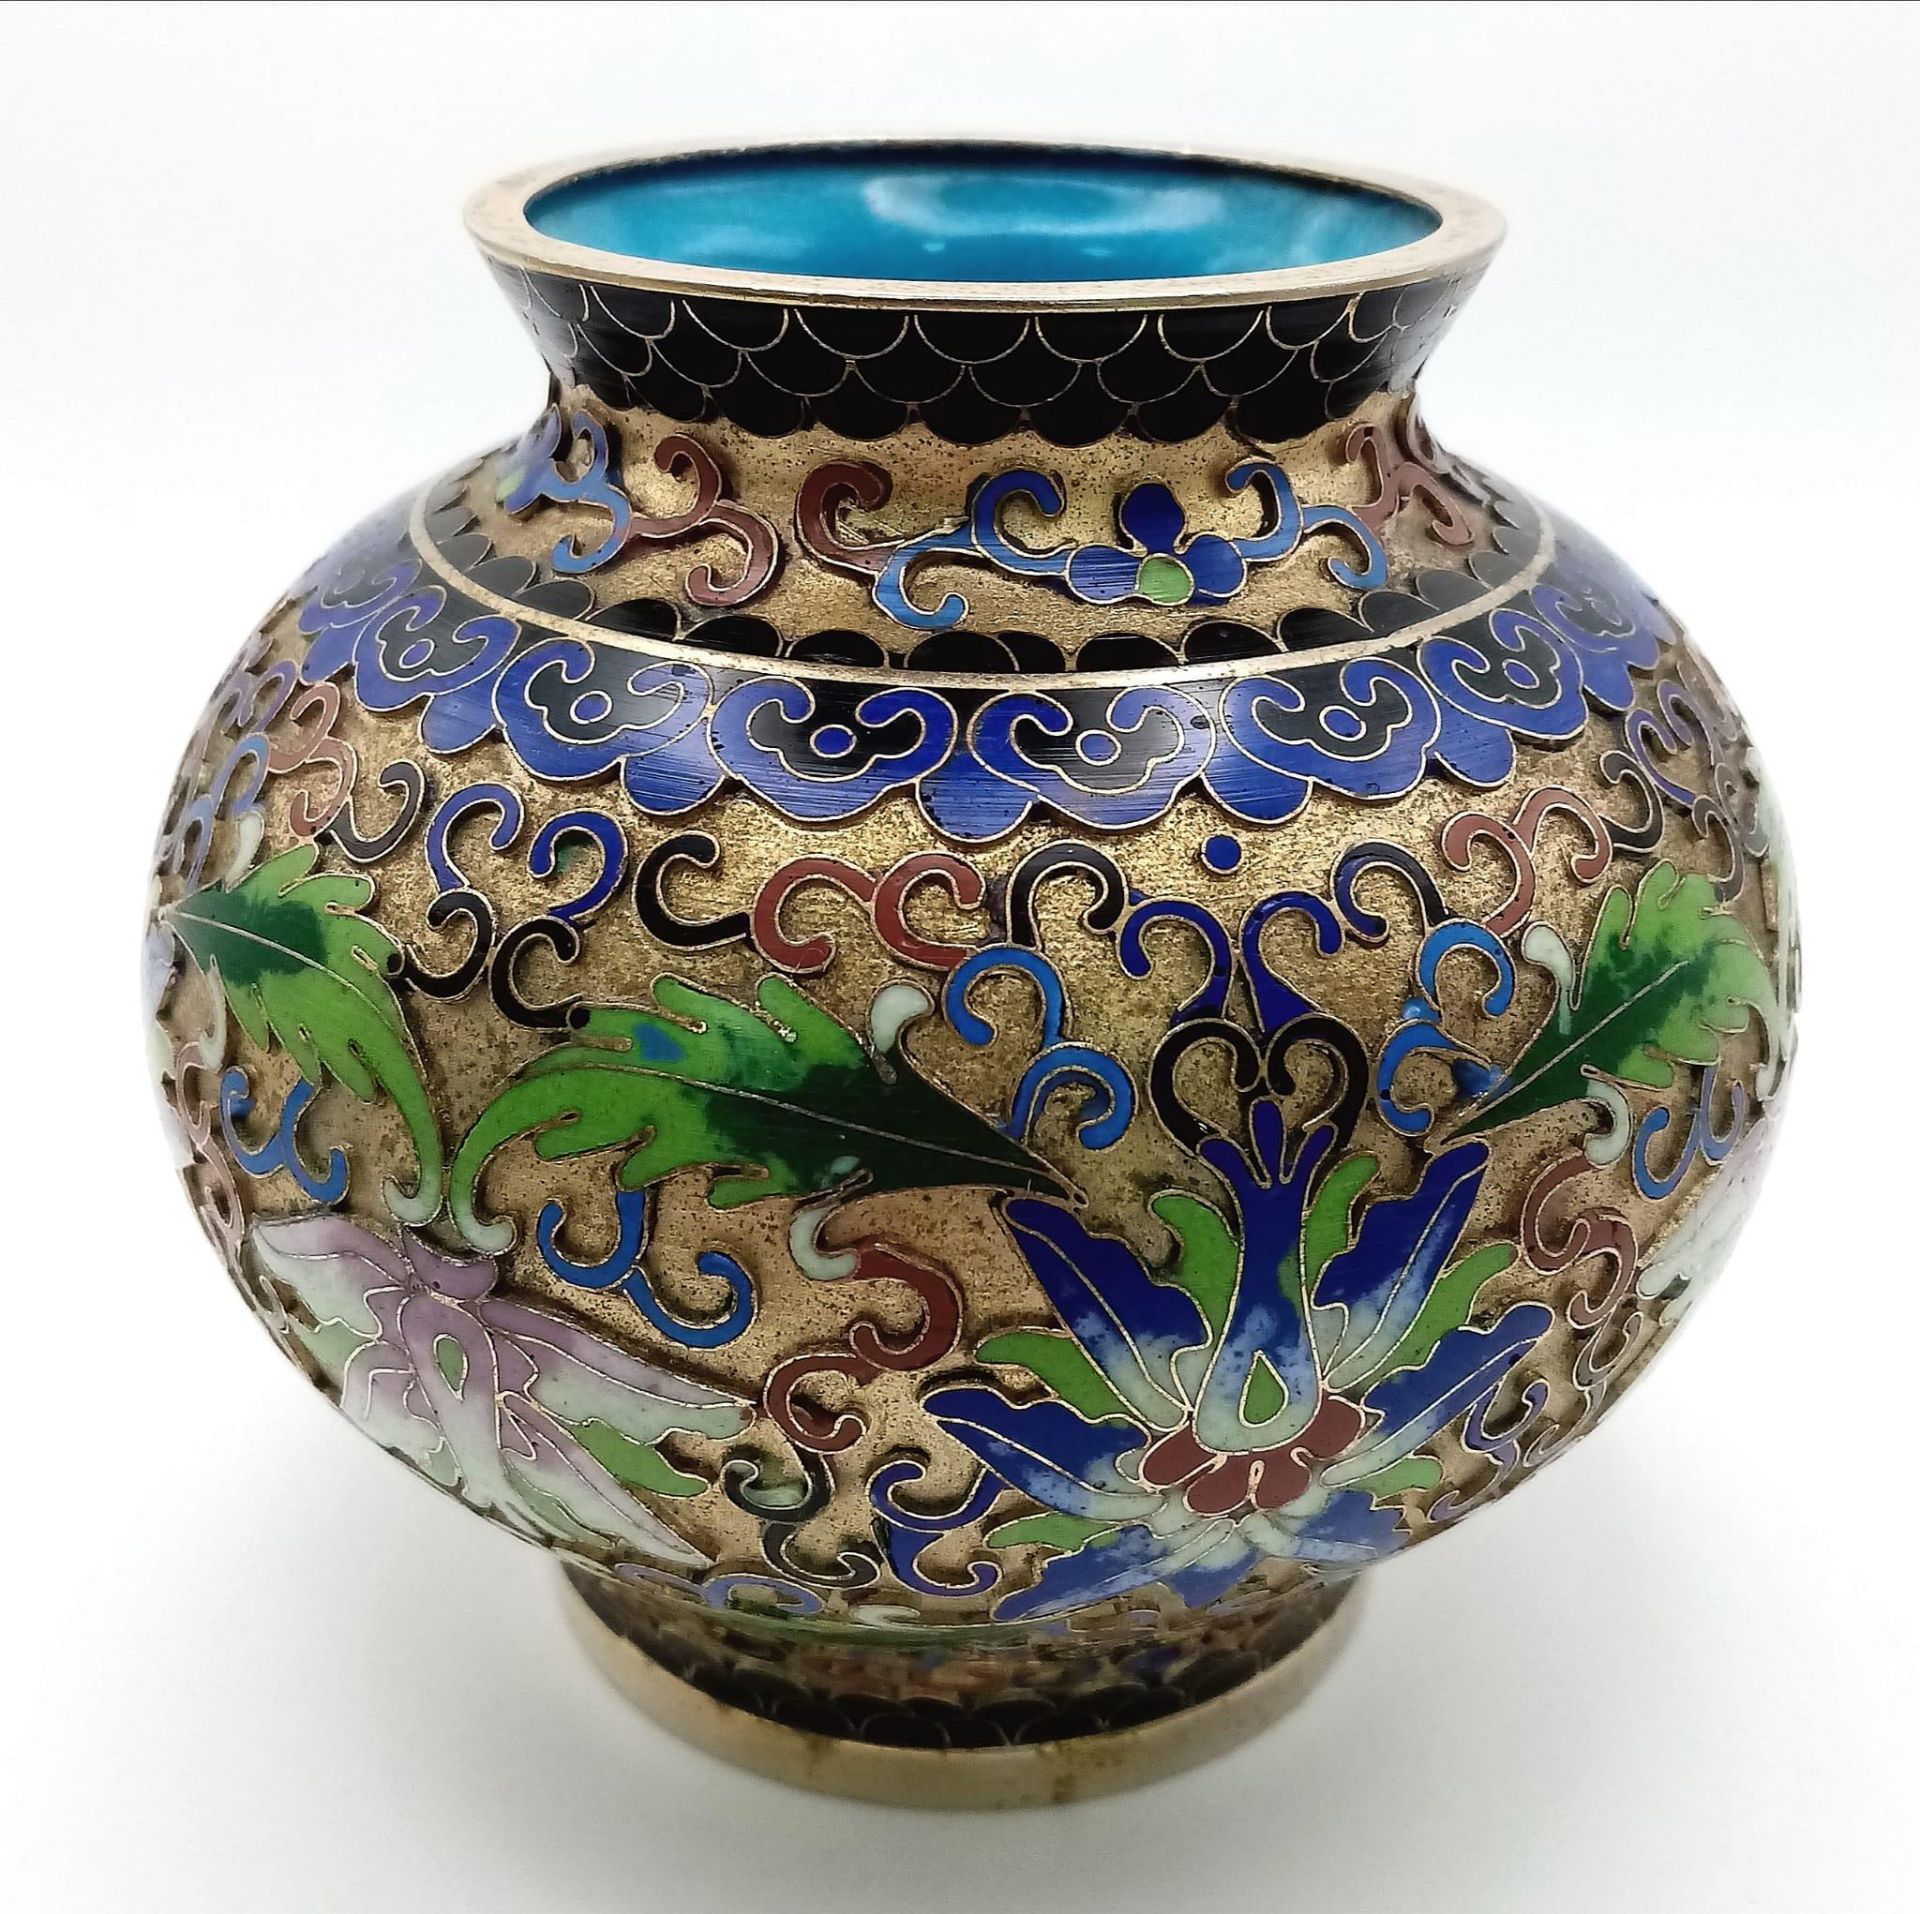 Stunning vintage Chinese Cloisonné Enamel Circular Pot. Wonderful floral decoration against a gold - Bild 2 aus 14